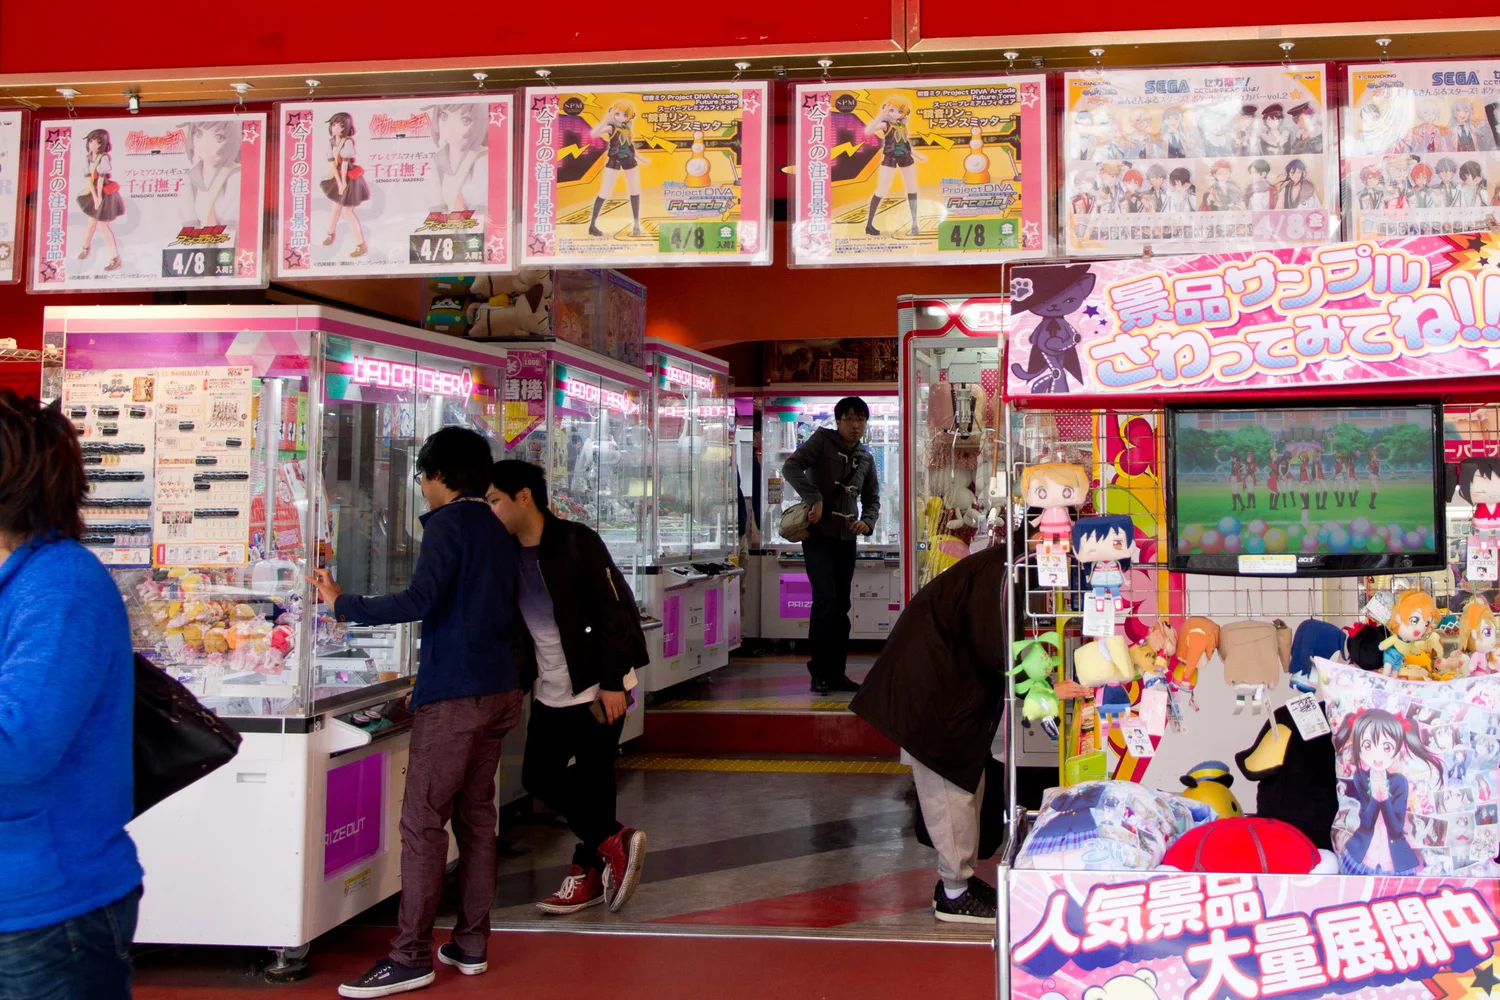 Discover Akihabara as an Otaku (Anime and Manga Fan)